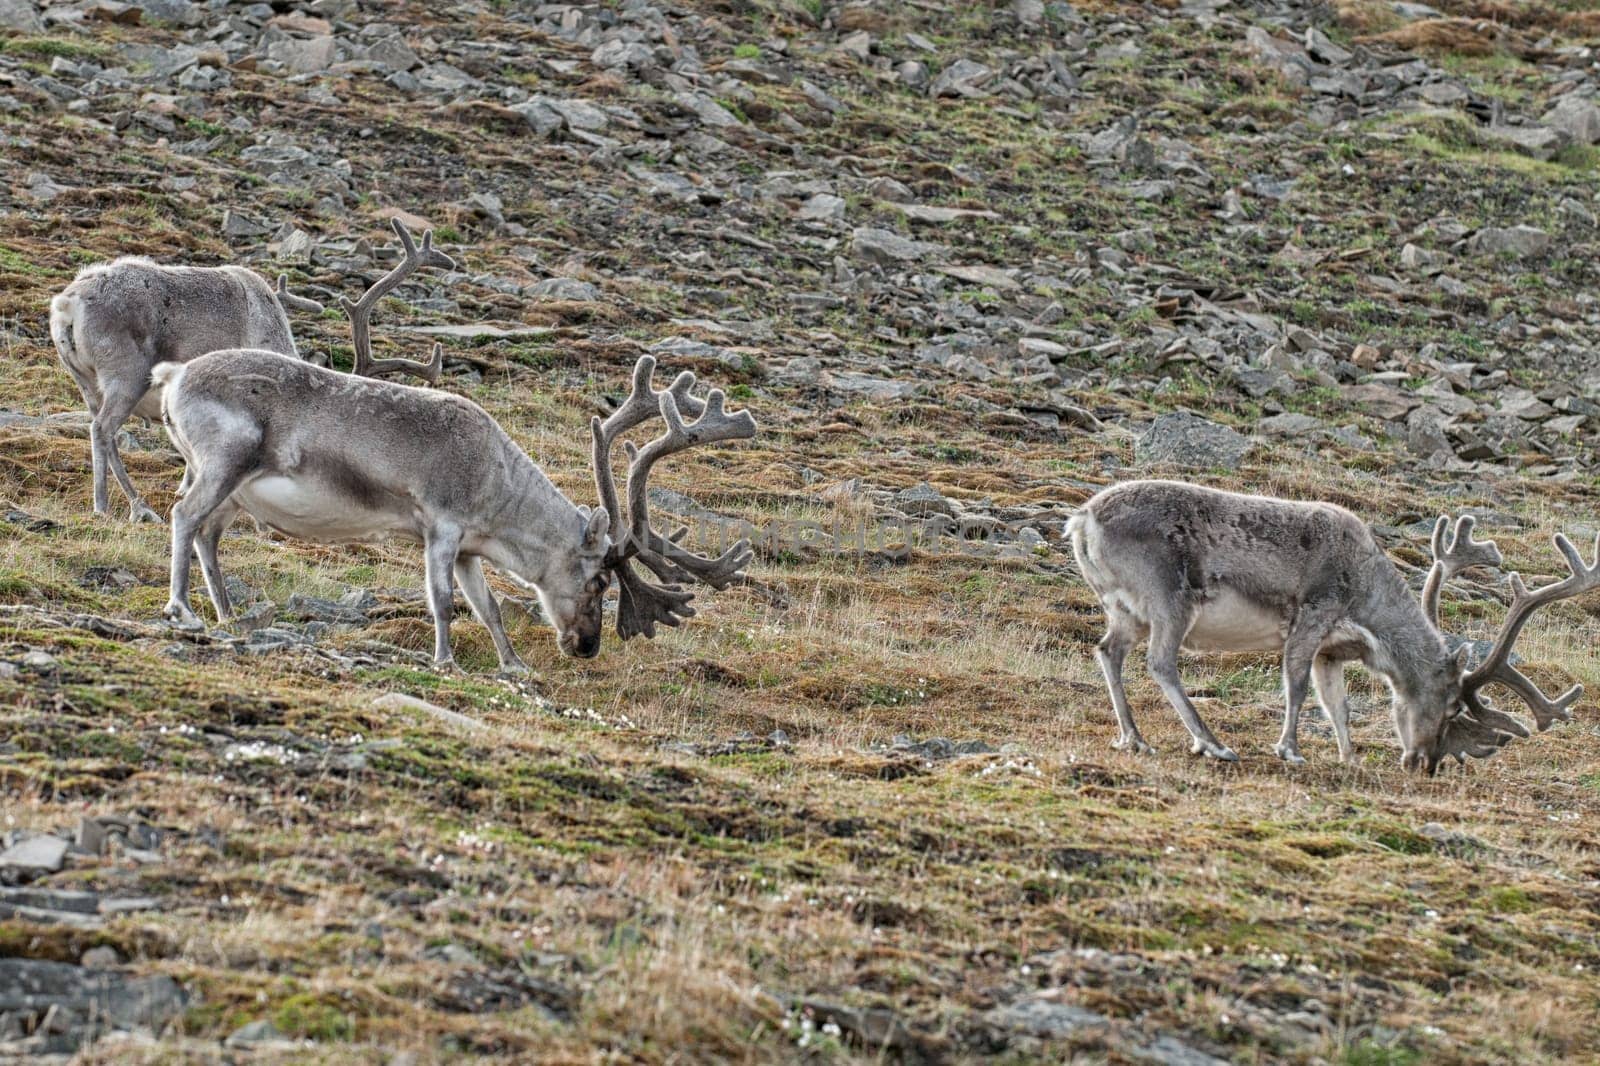 wild reindeer in Svalbard island